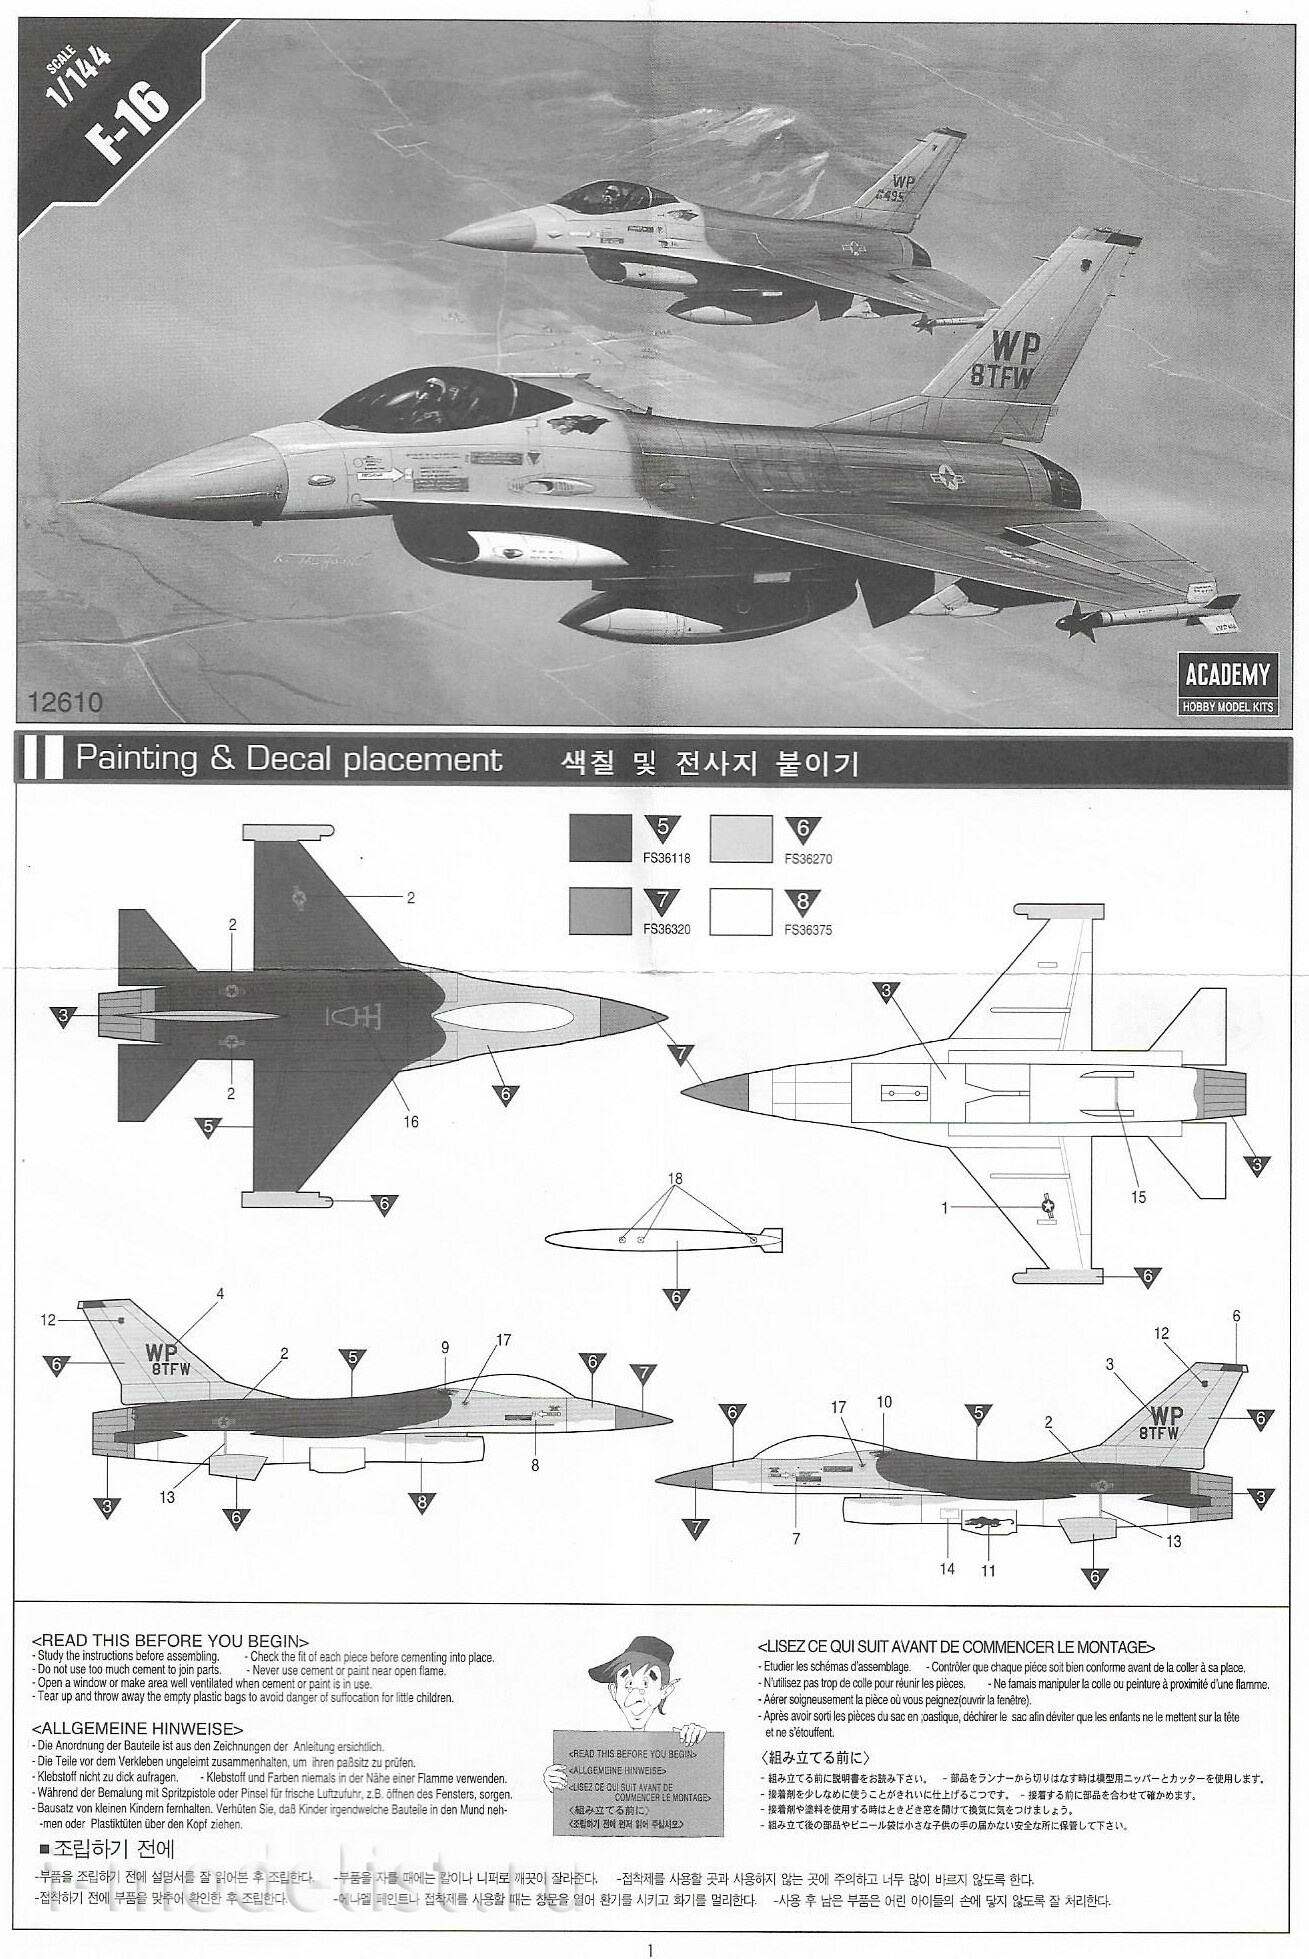 12610 Academy 1/144 Самолет F-16 